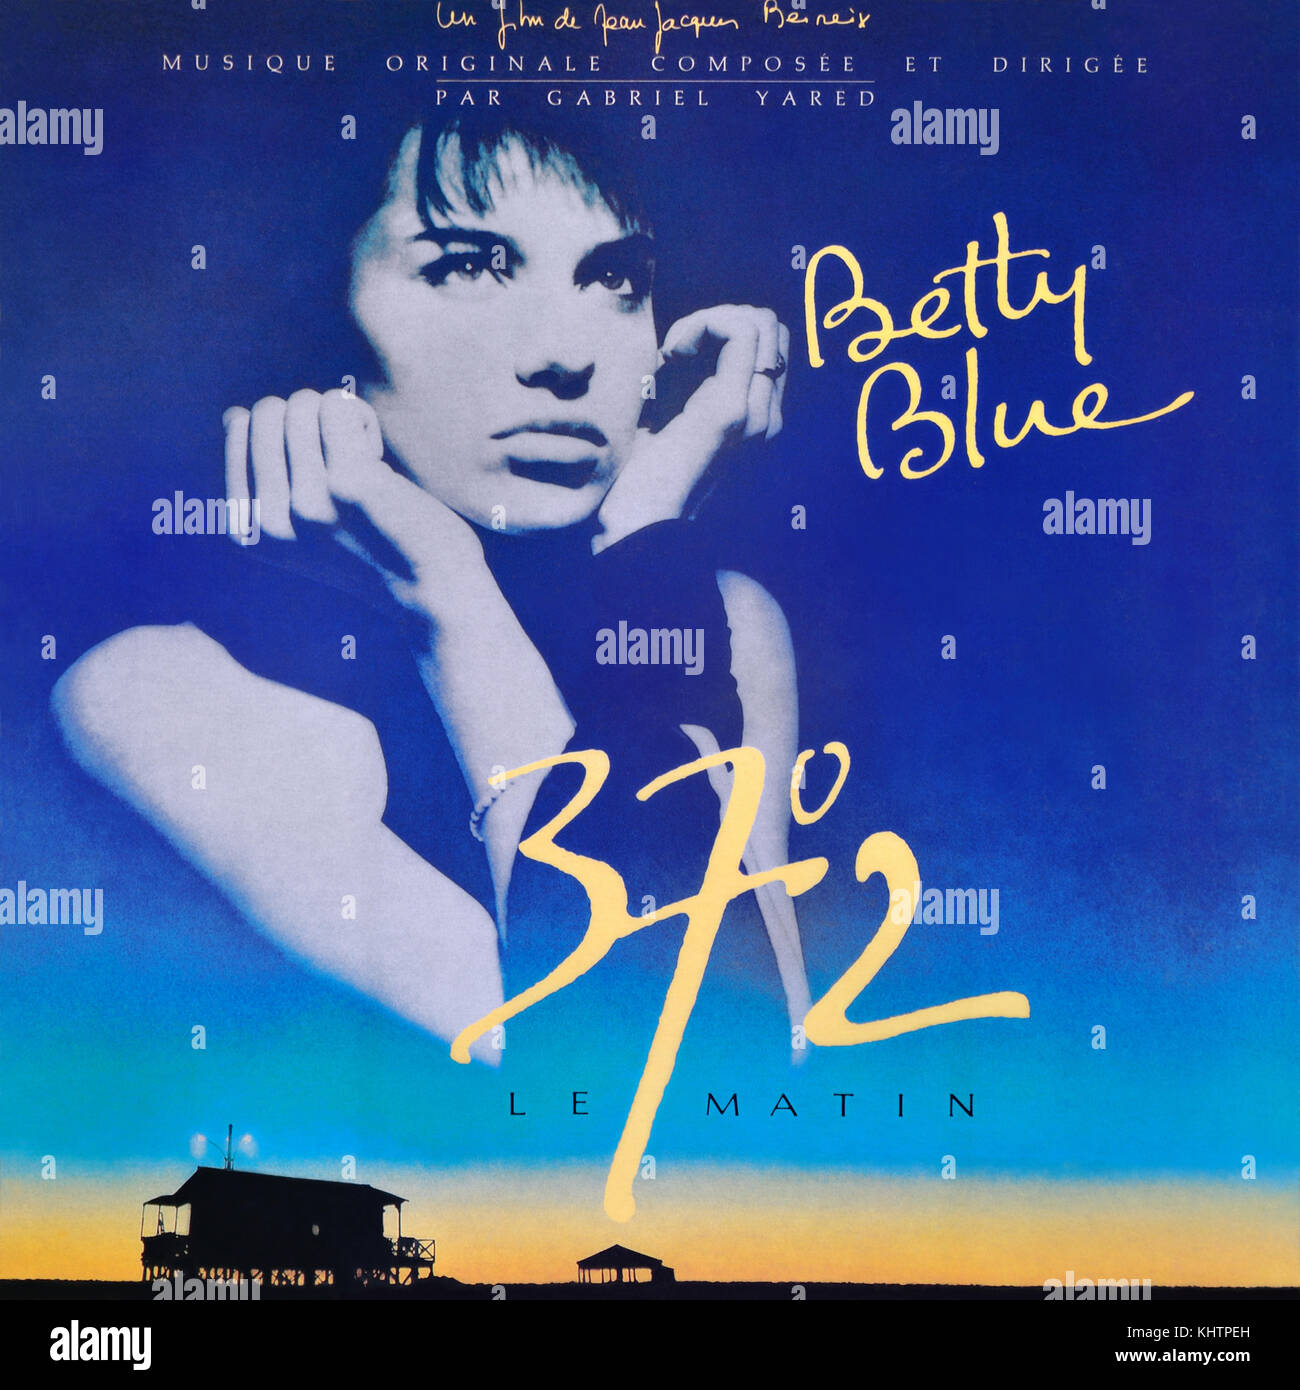 Betty Blue (soundtrack) - original vinyl album cover - 37°2 Le matin - 1986 Stock Photo